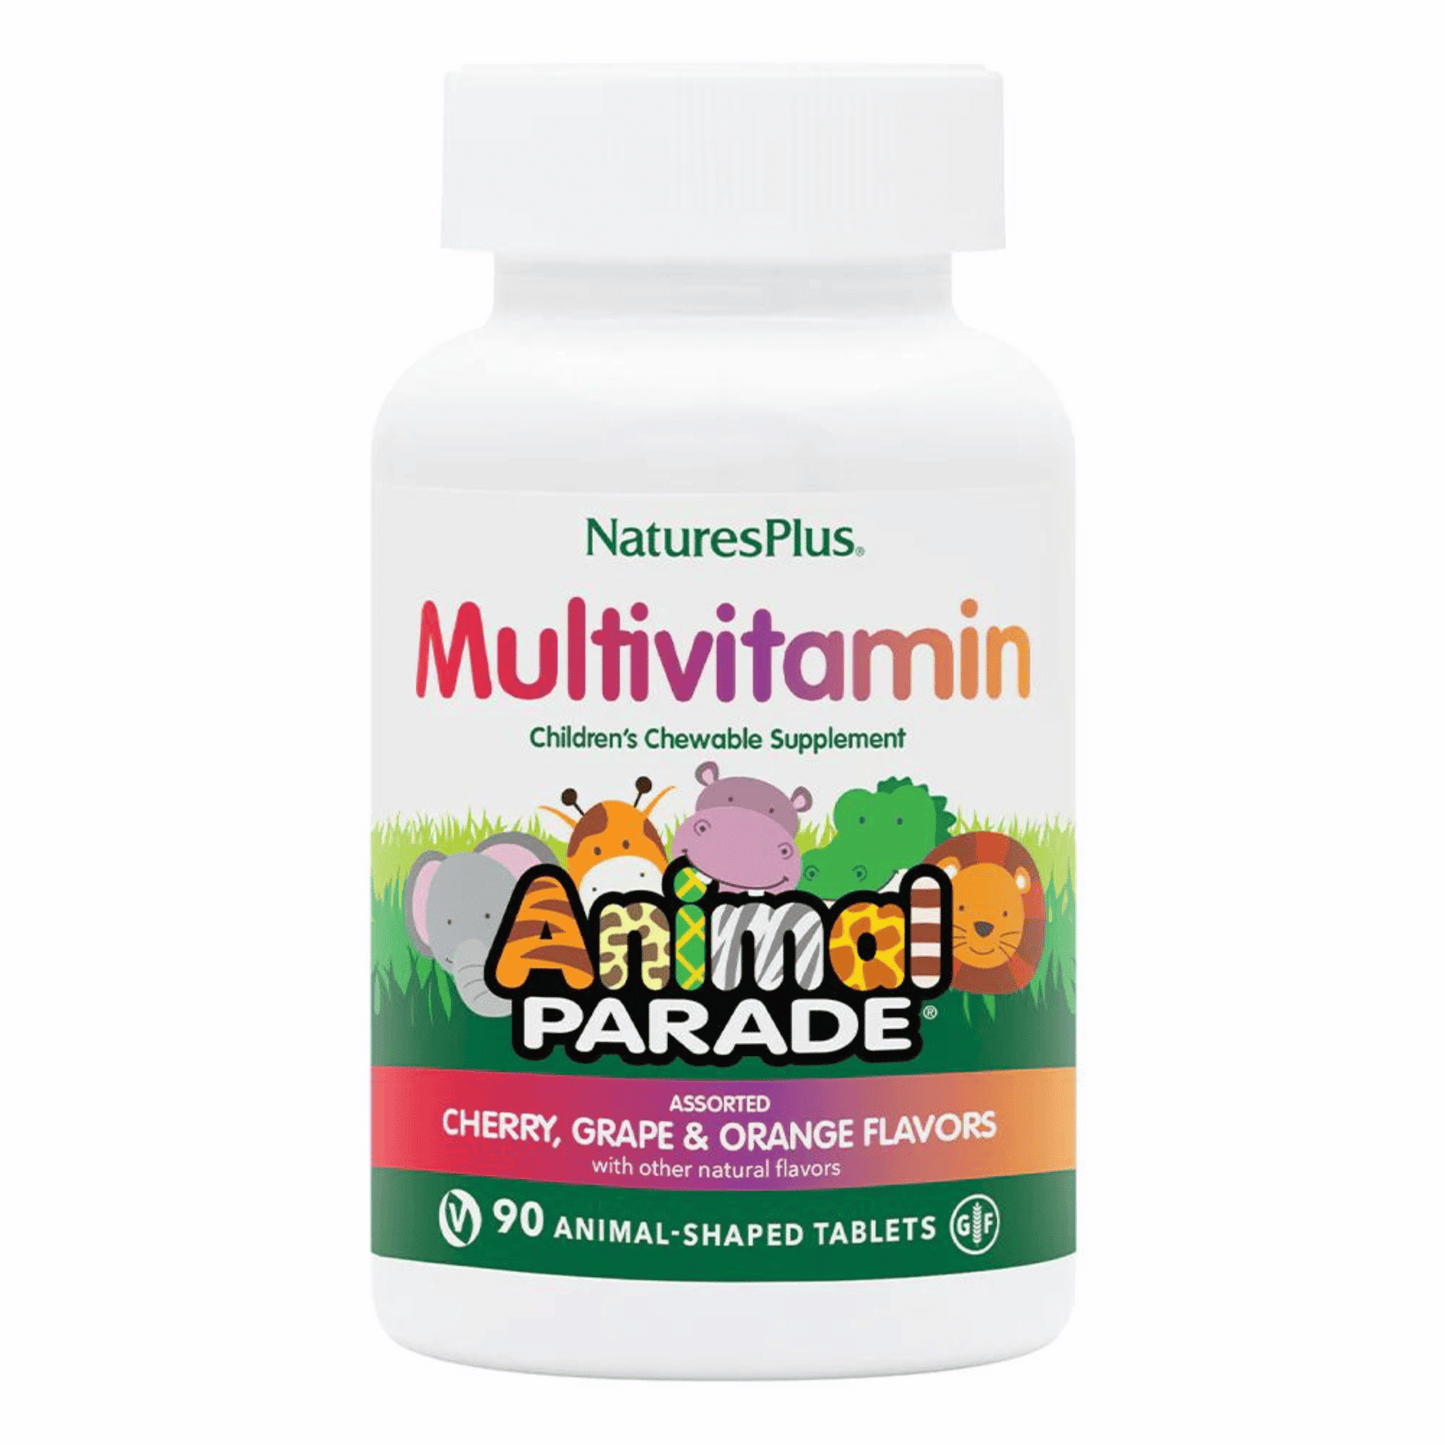 Primary Image of Animal Parade Children's Multivitamin